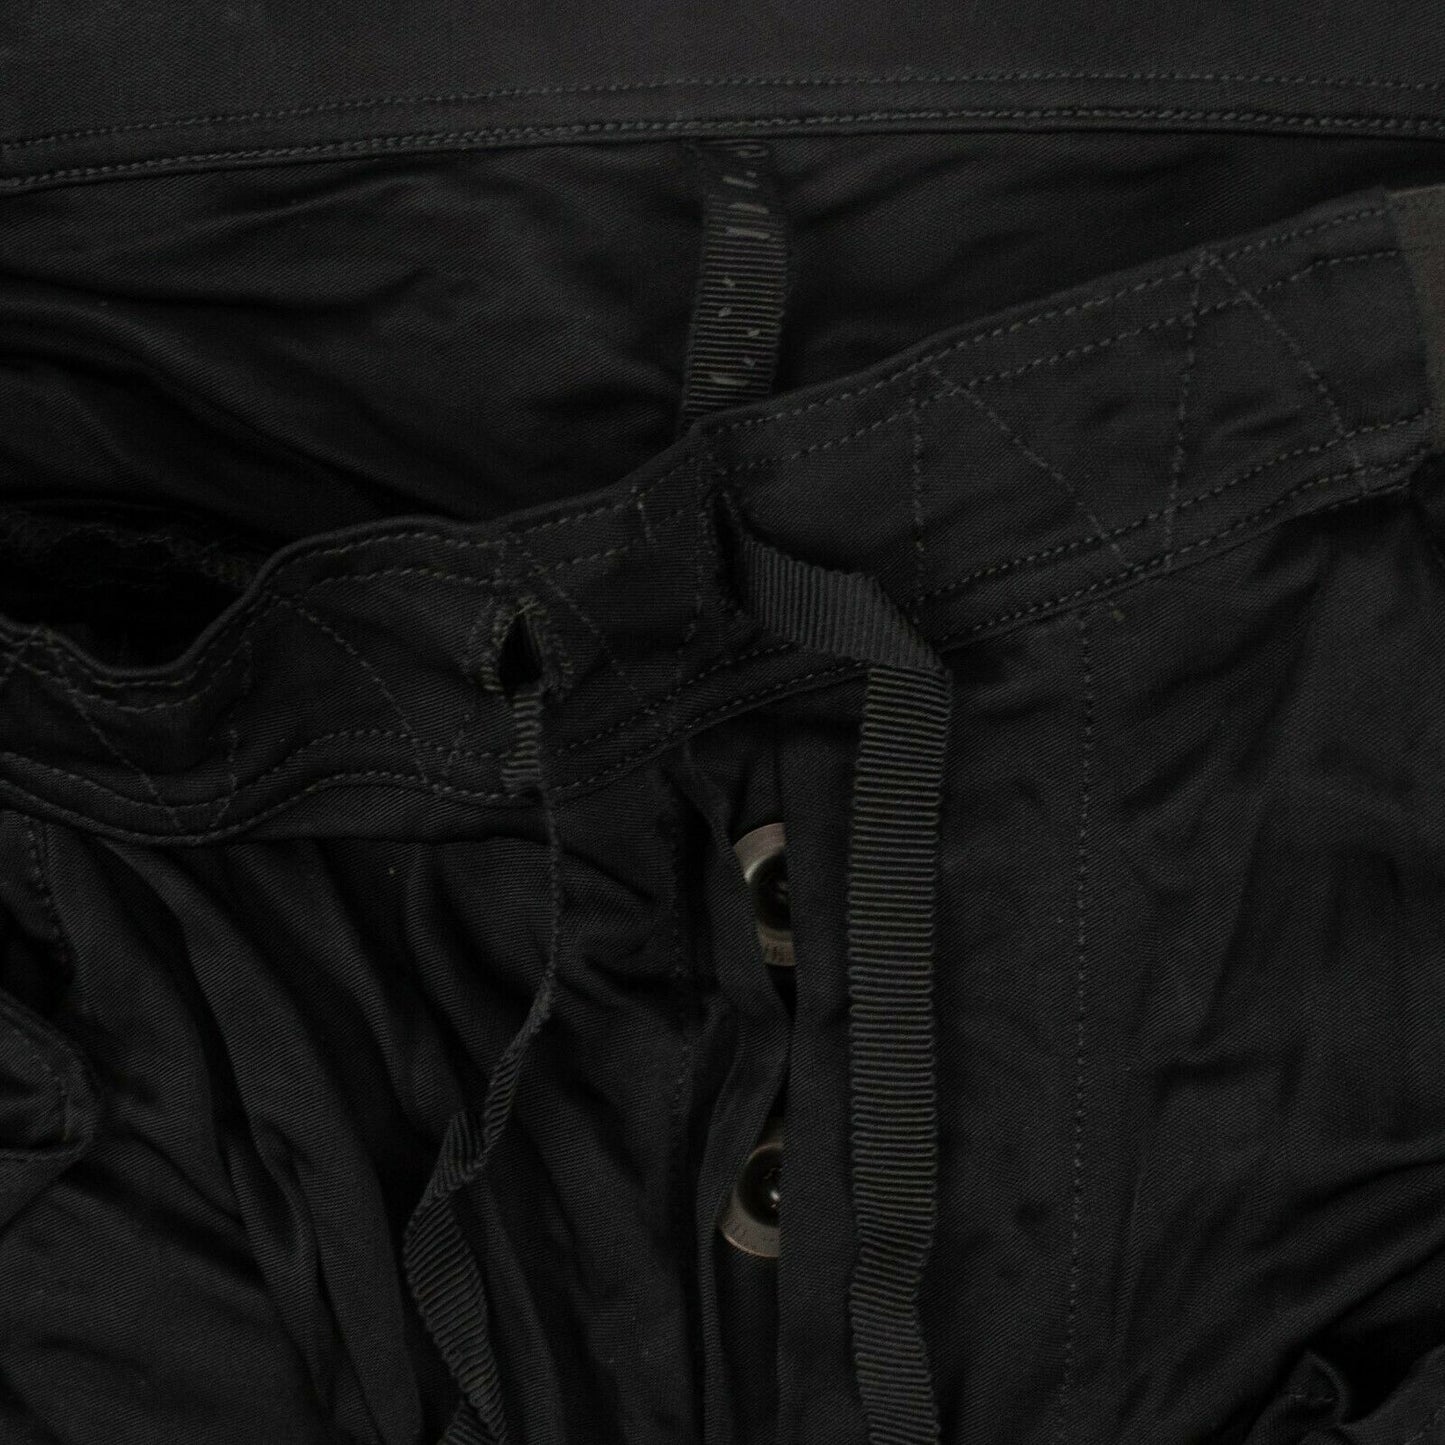 Unravel Project Cargo Lounge Pants - Black